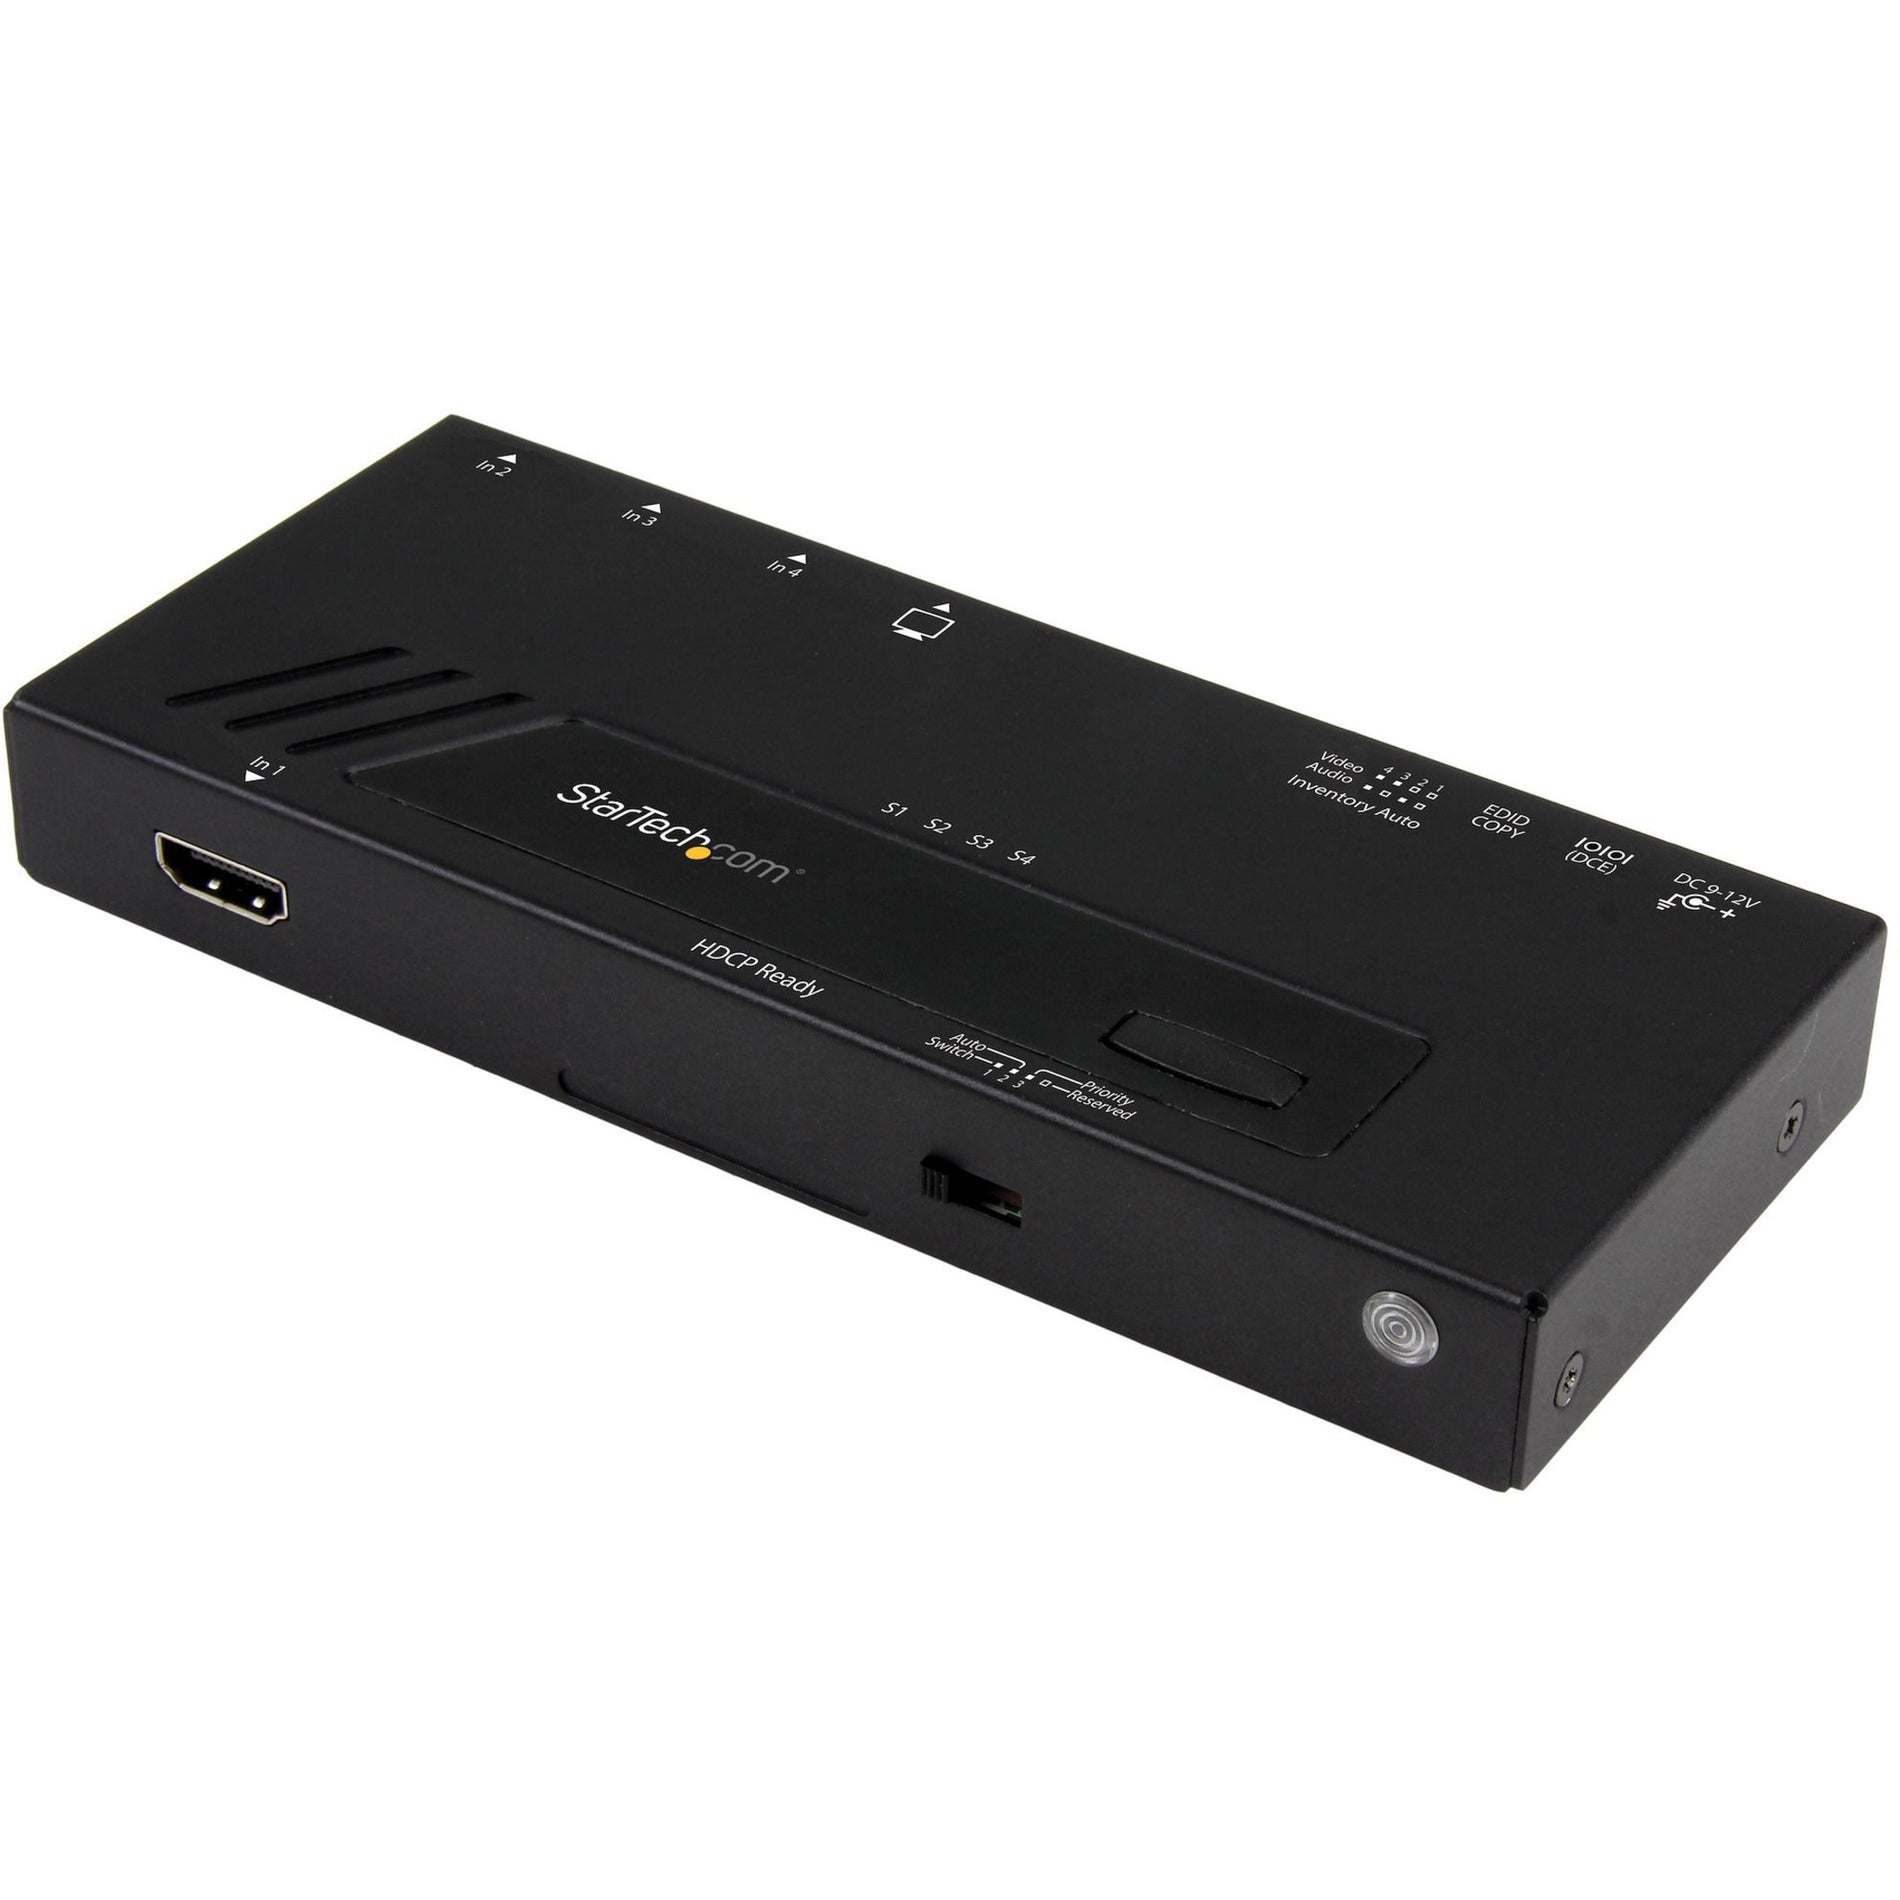 StarTech.com VS421HD4KA 4-Port HDMI Automatic Video Switch - 4K, Fast Switching, Auto-sensing